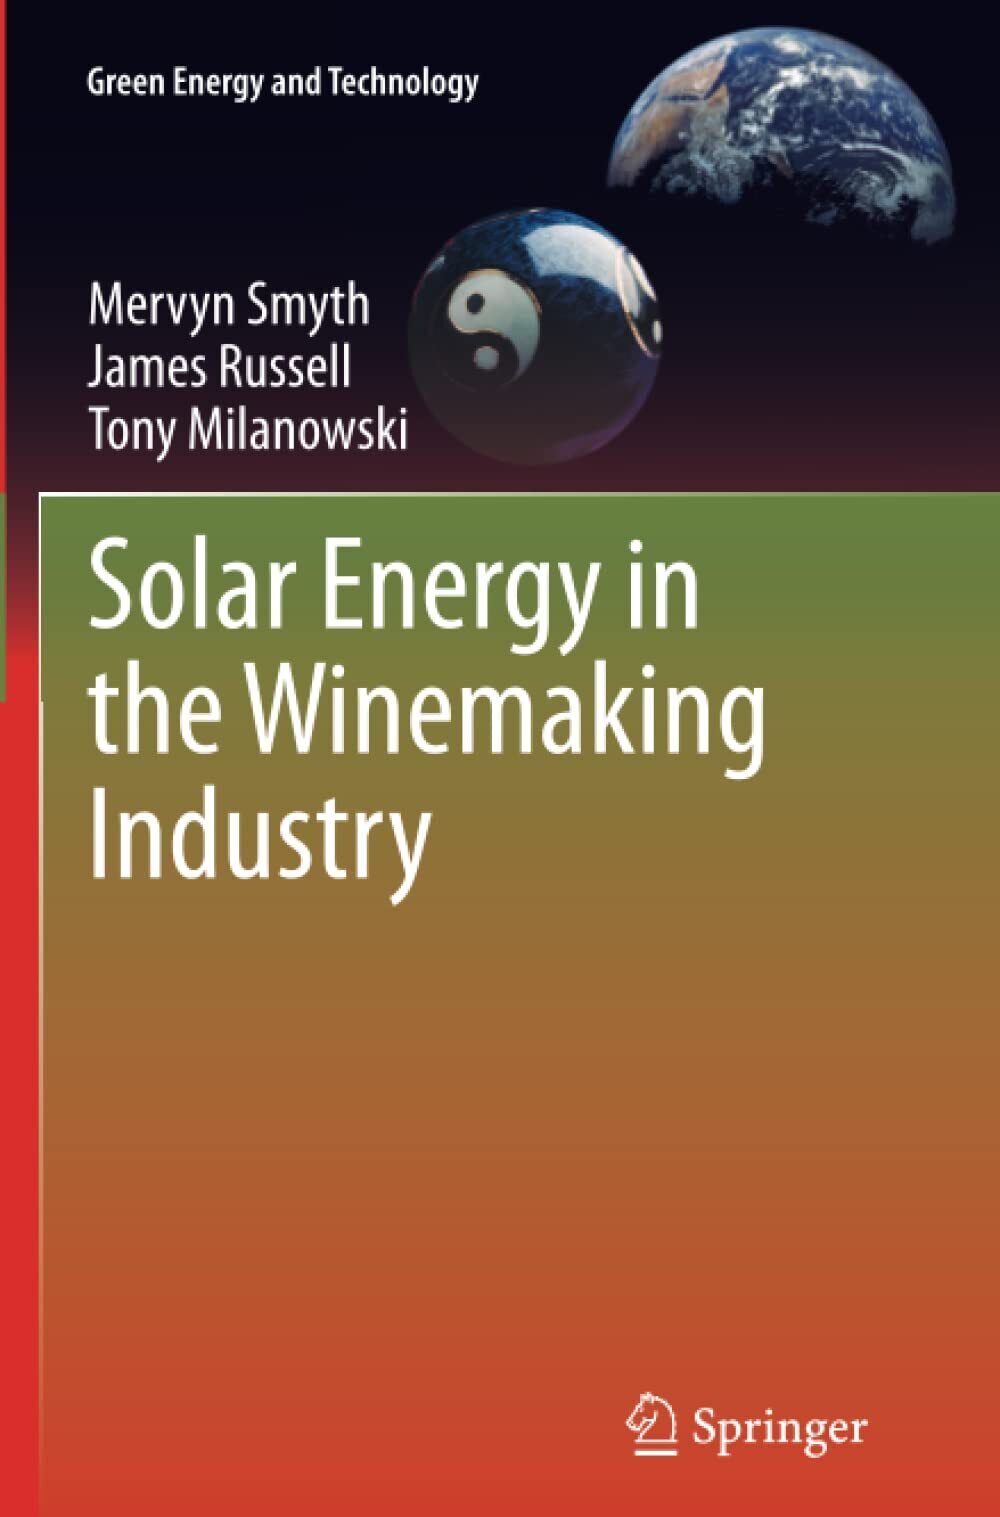 Solar Energy in the Winemaking Industry - Tony Milanowski - Springer, 2013